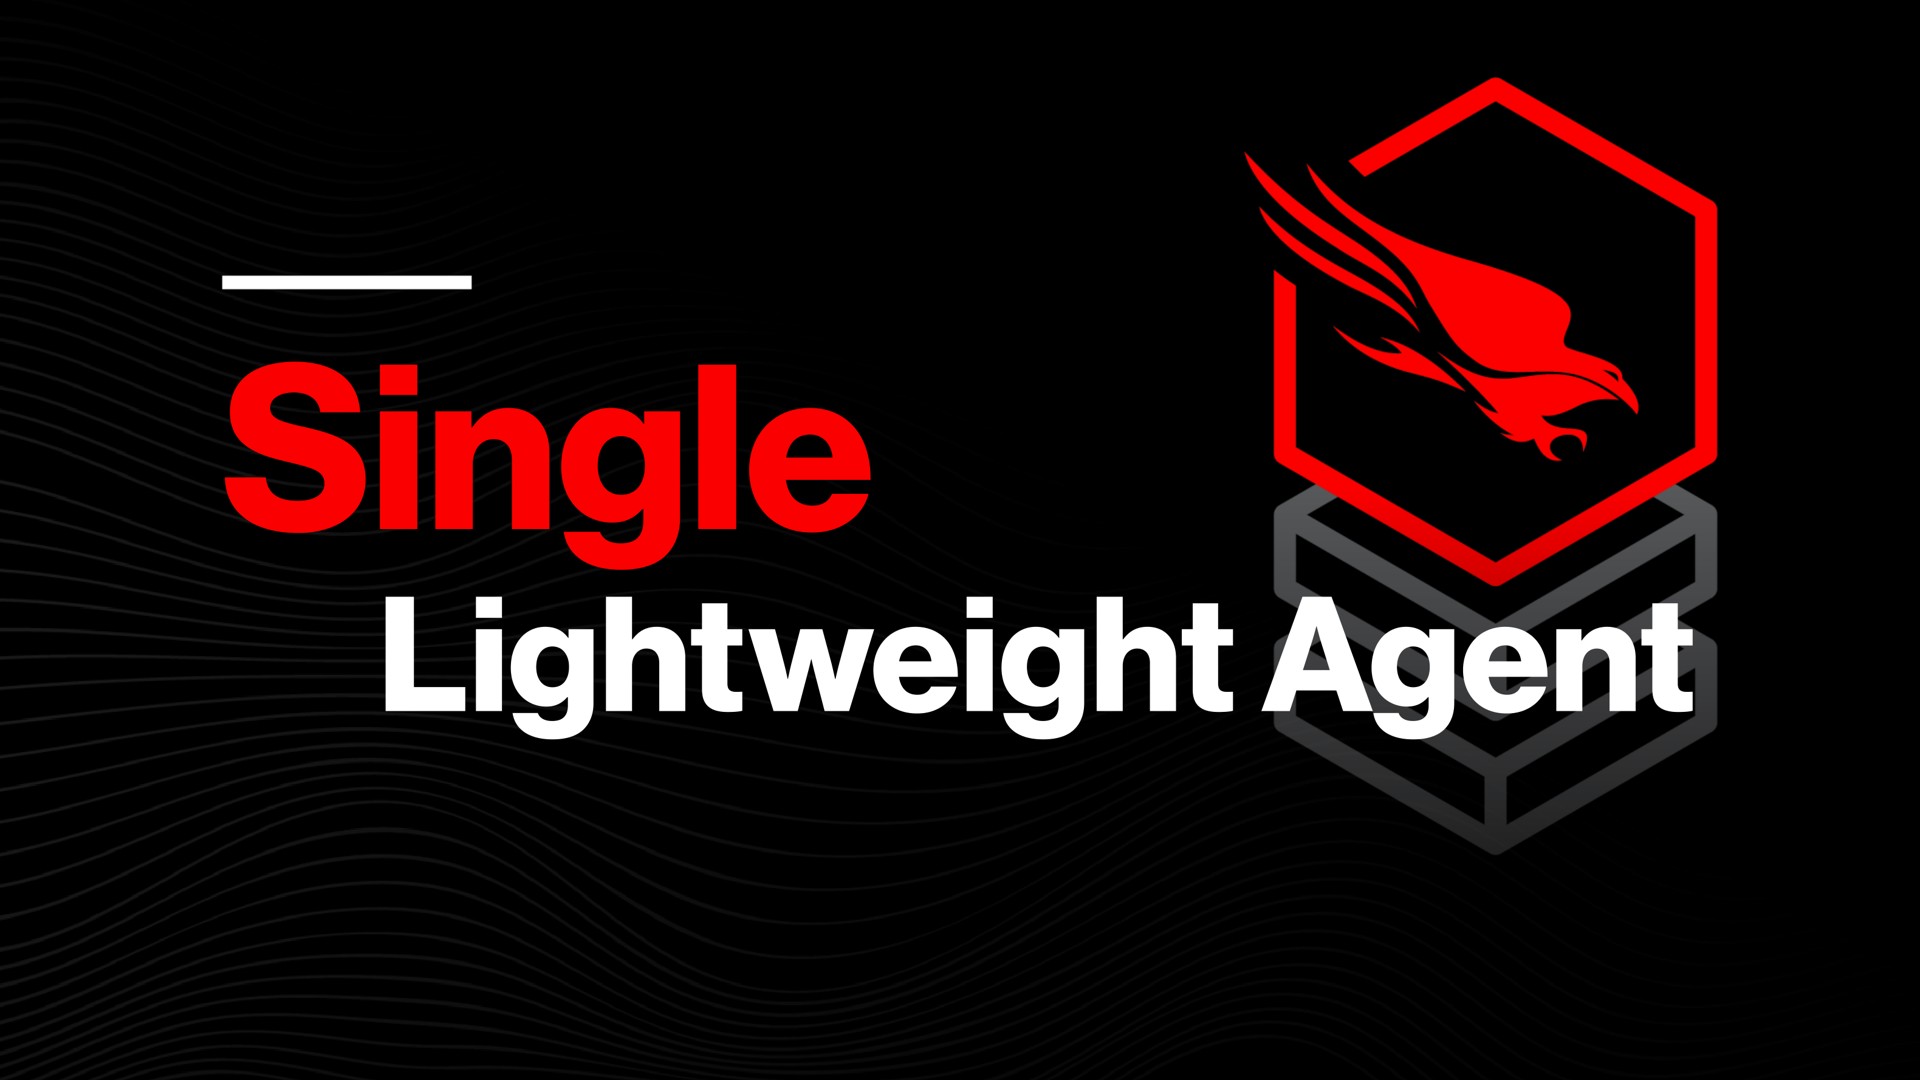 single lightweight agent | Crowdstrike